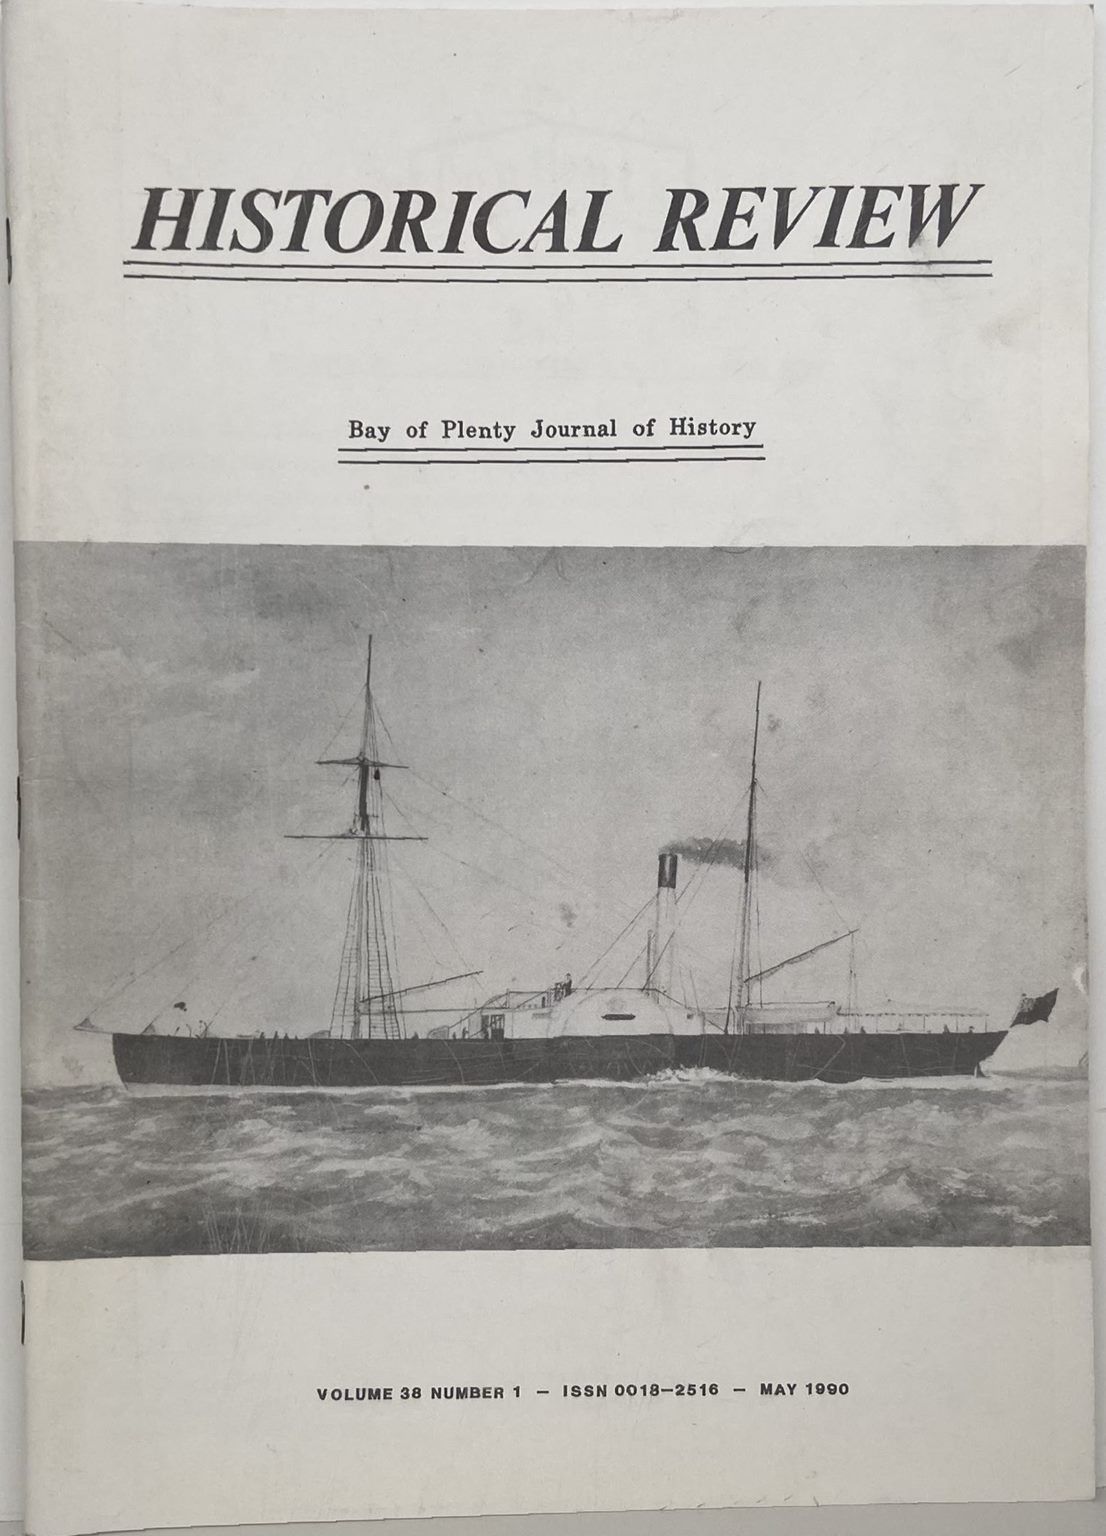 HISTORICAL REVIEW: Bay of Plenty Journal of History - Vol. 38, No. 1 - May 1990